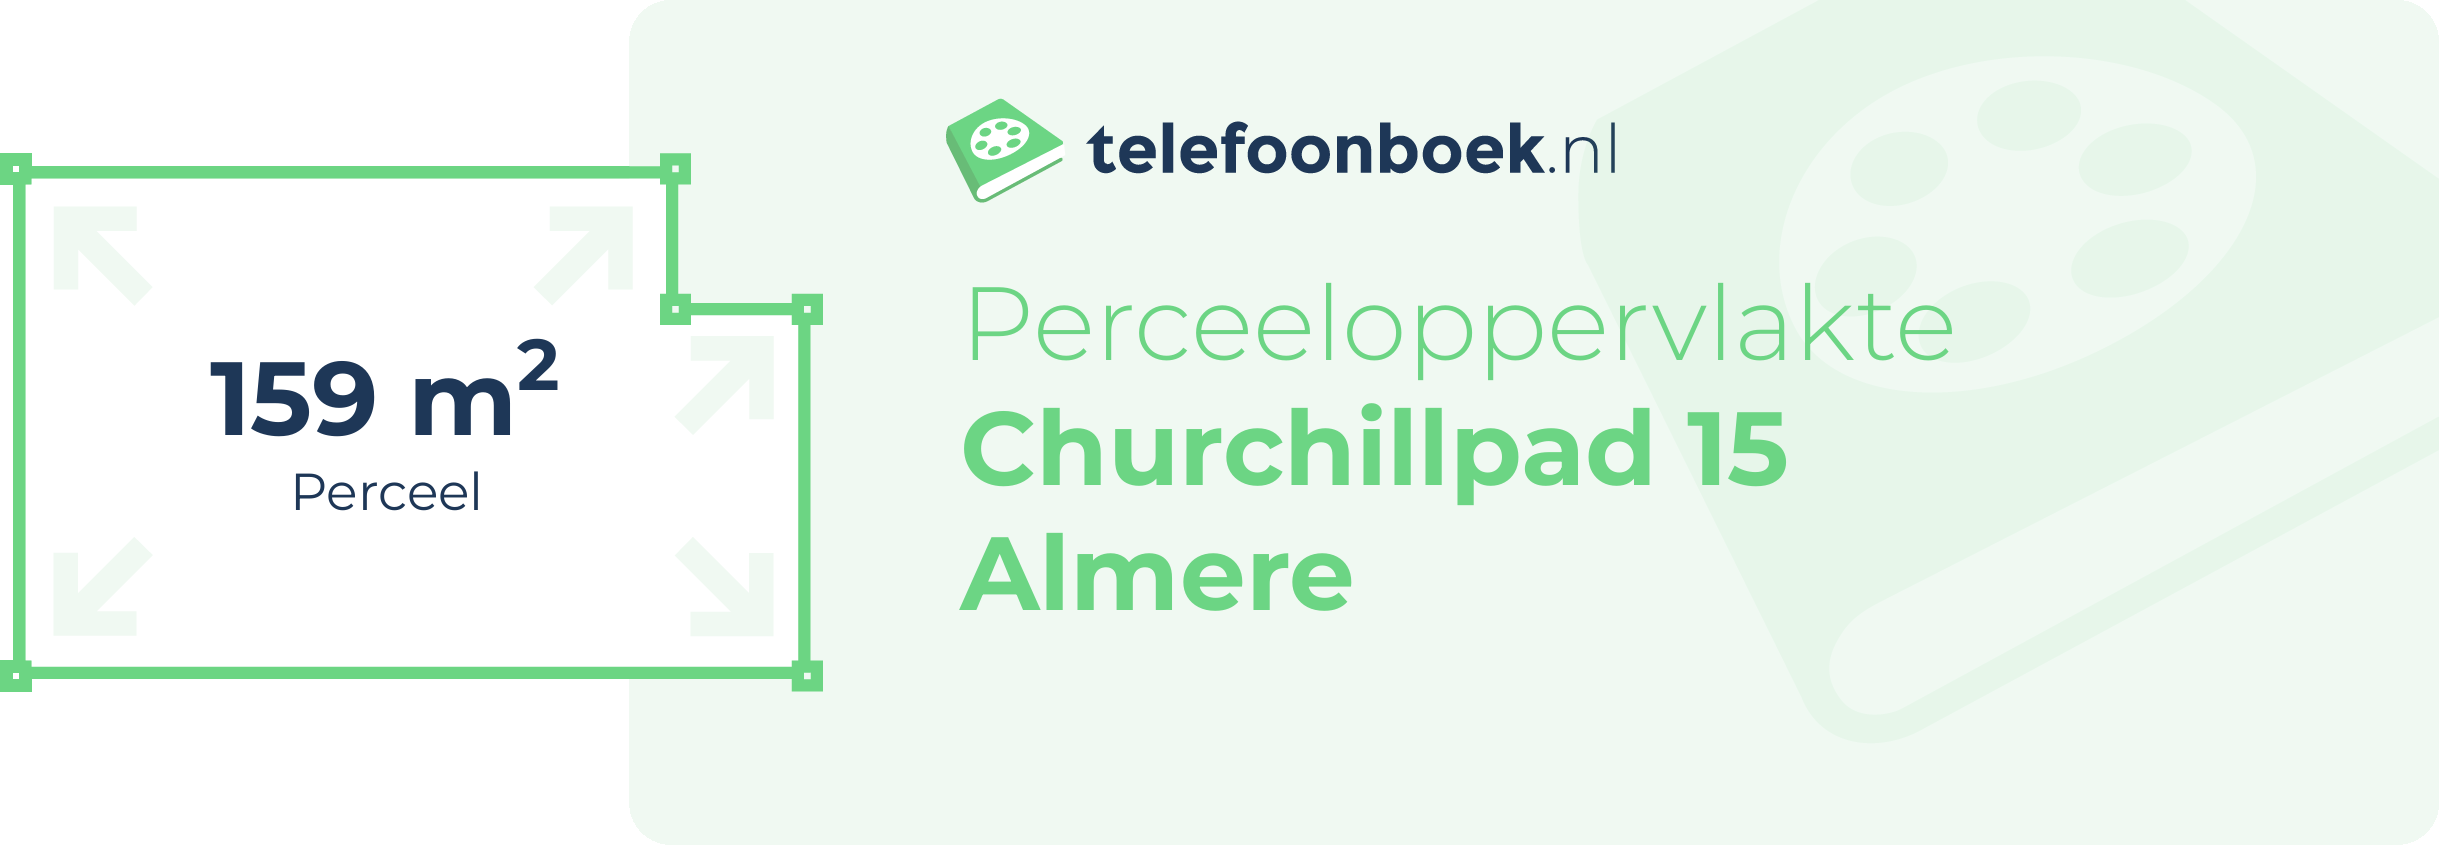 Perceeloppervlakte Churchillpad 15 Almere